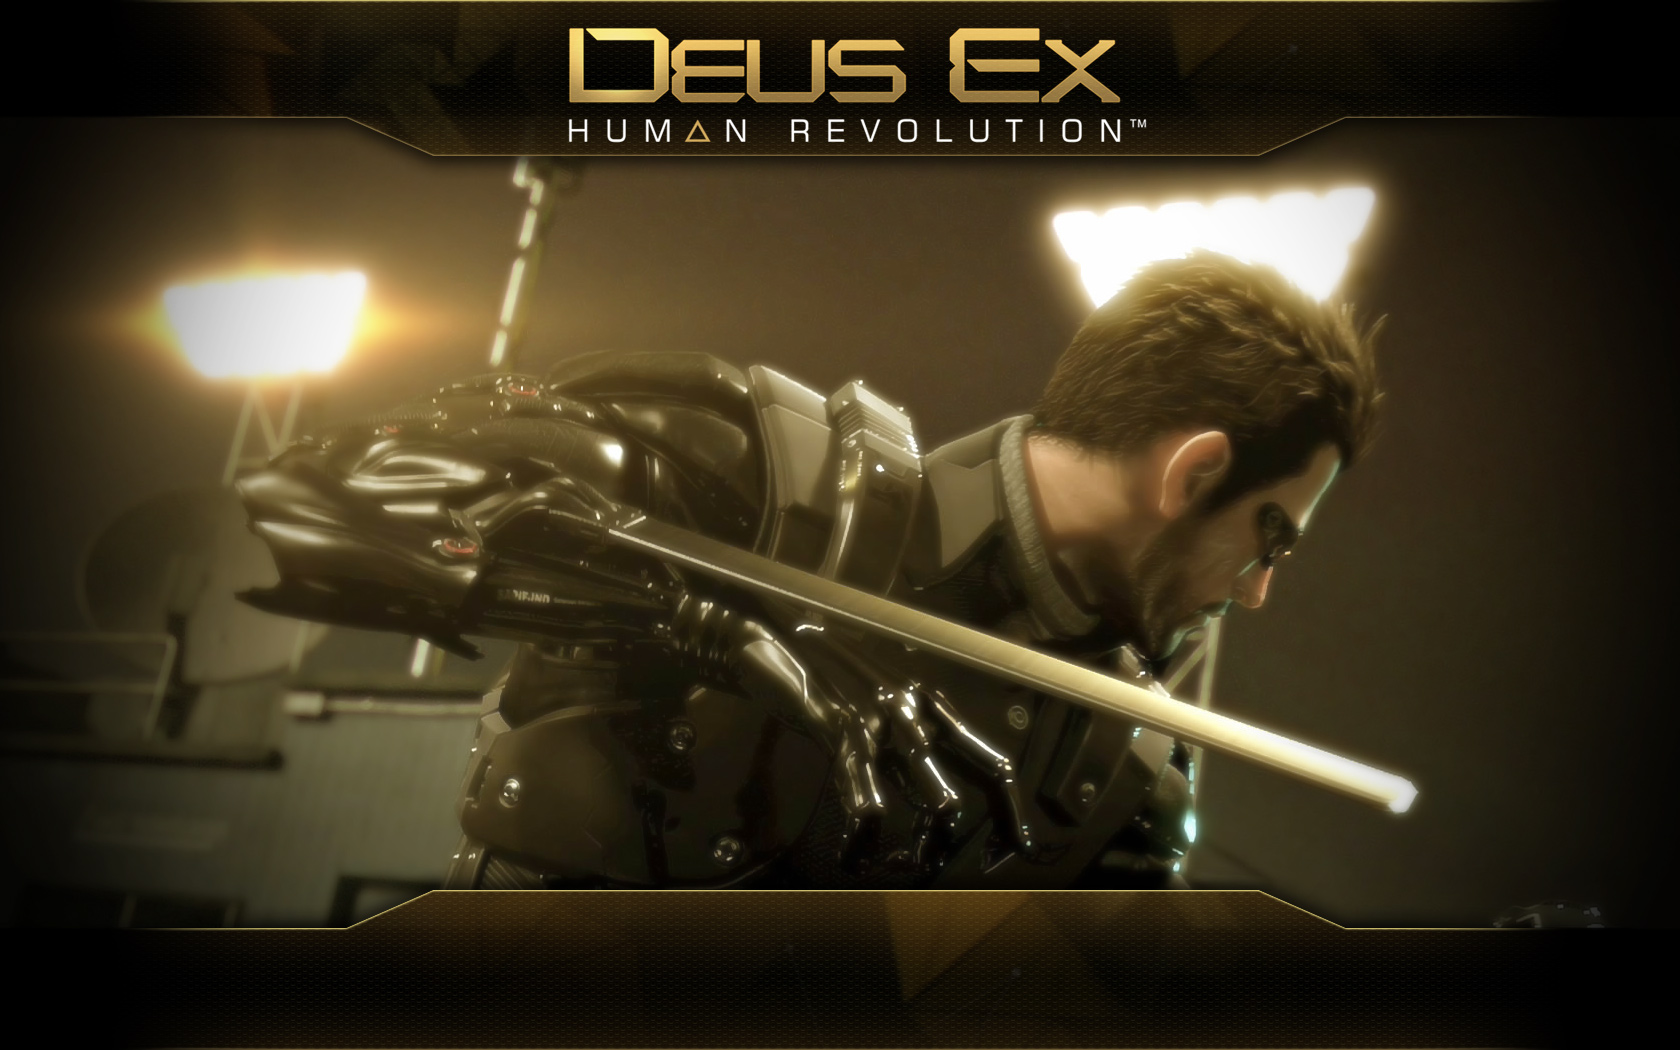 Wallpapers Deus Ex Human Revolution Hd X 1680x1050 | #419156 #deus ex